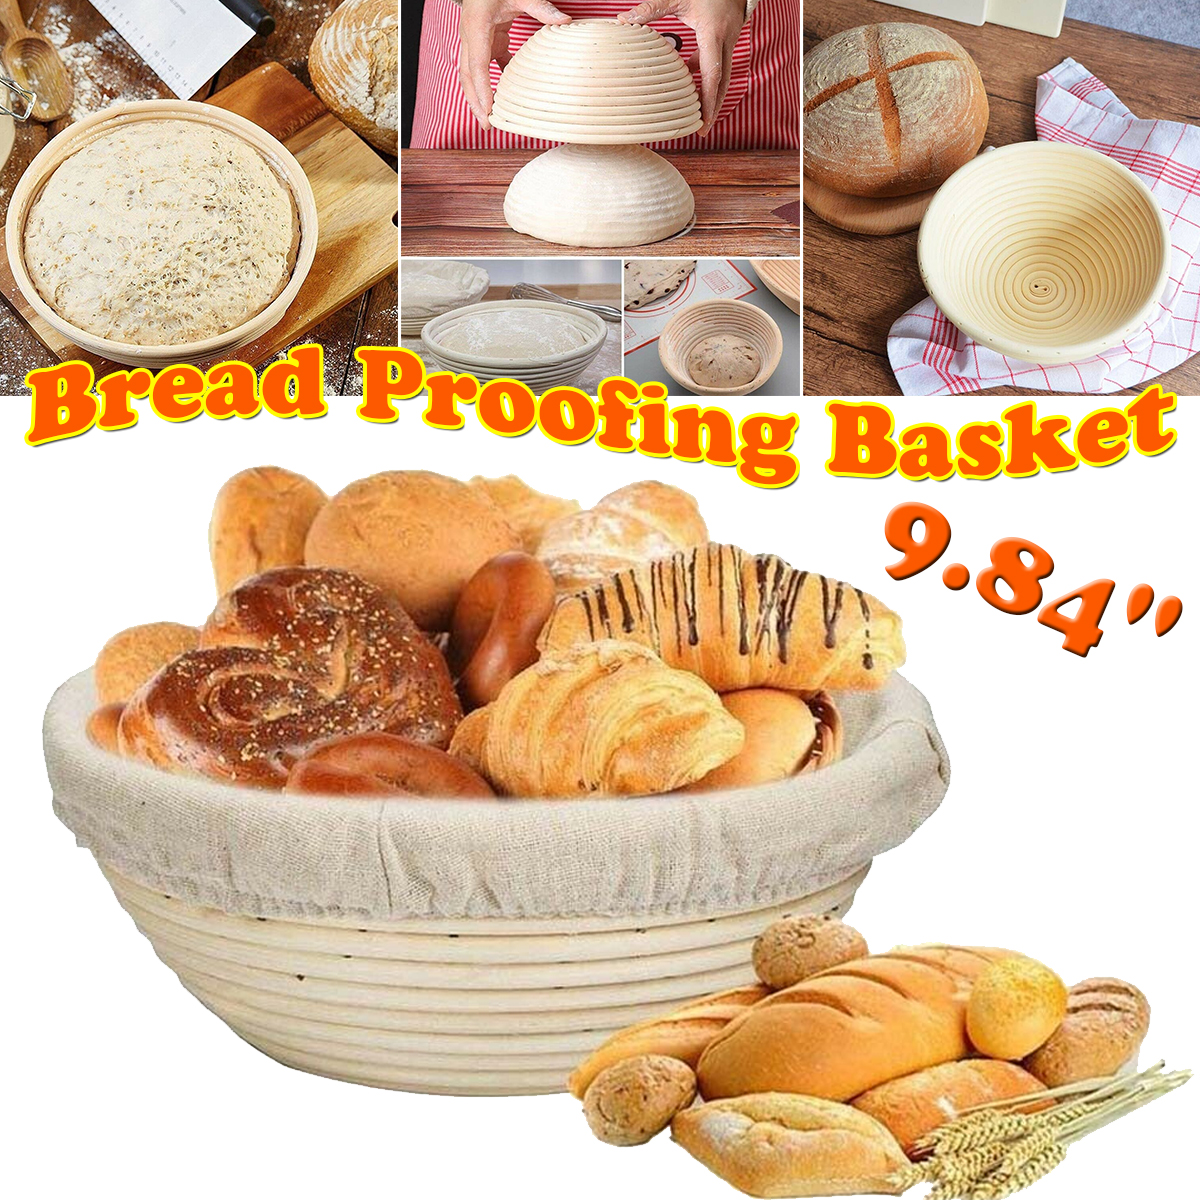 25cm-Round-Bread-Proofing-Basket-Sourdough-Proving-Banneton-Beginner-Baking-Tool-1741907-1